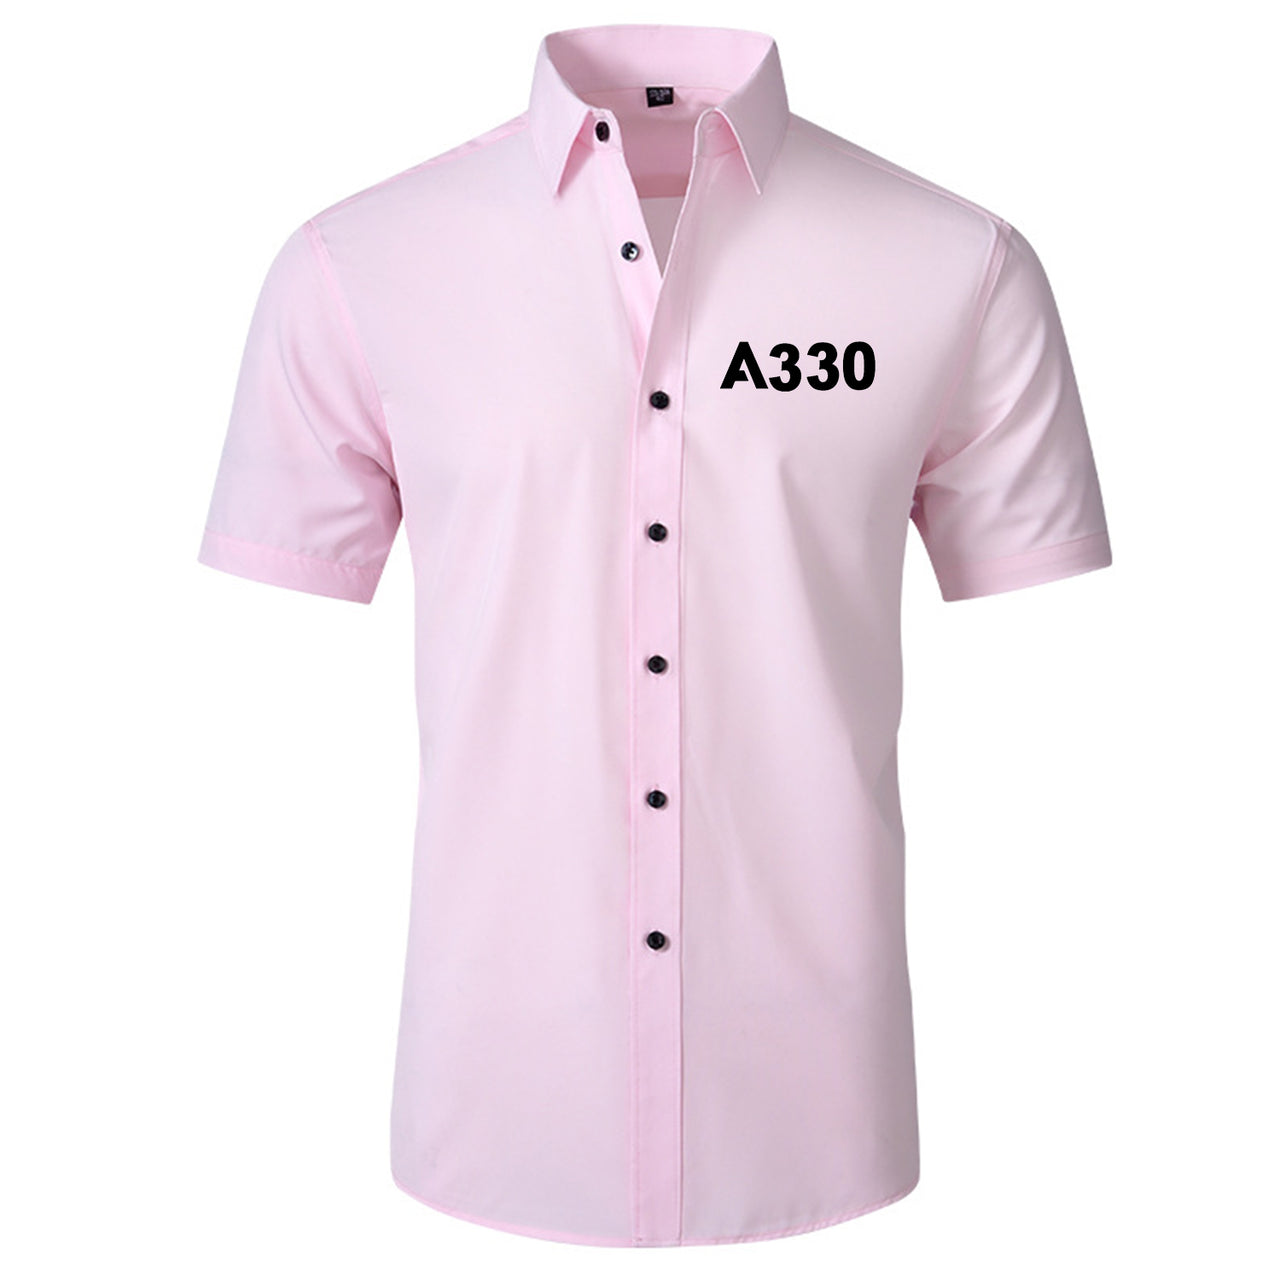 A330 Flat Text Designed Short Sleeve Shirts